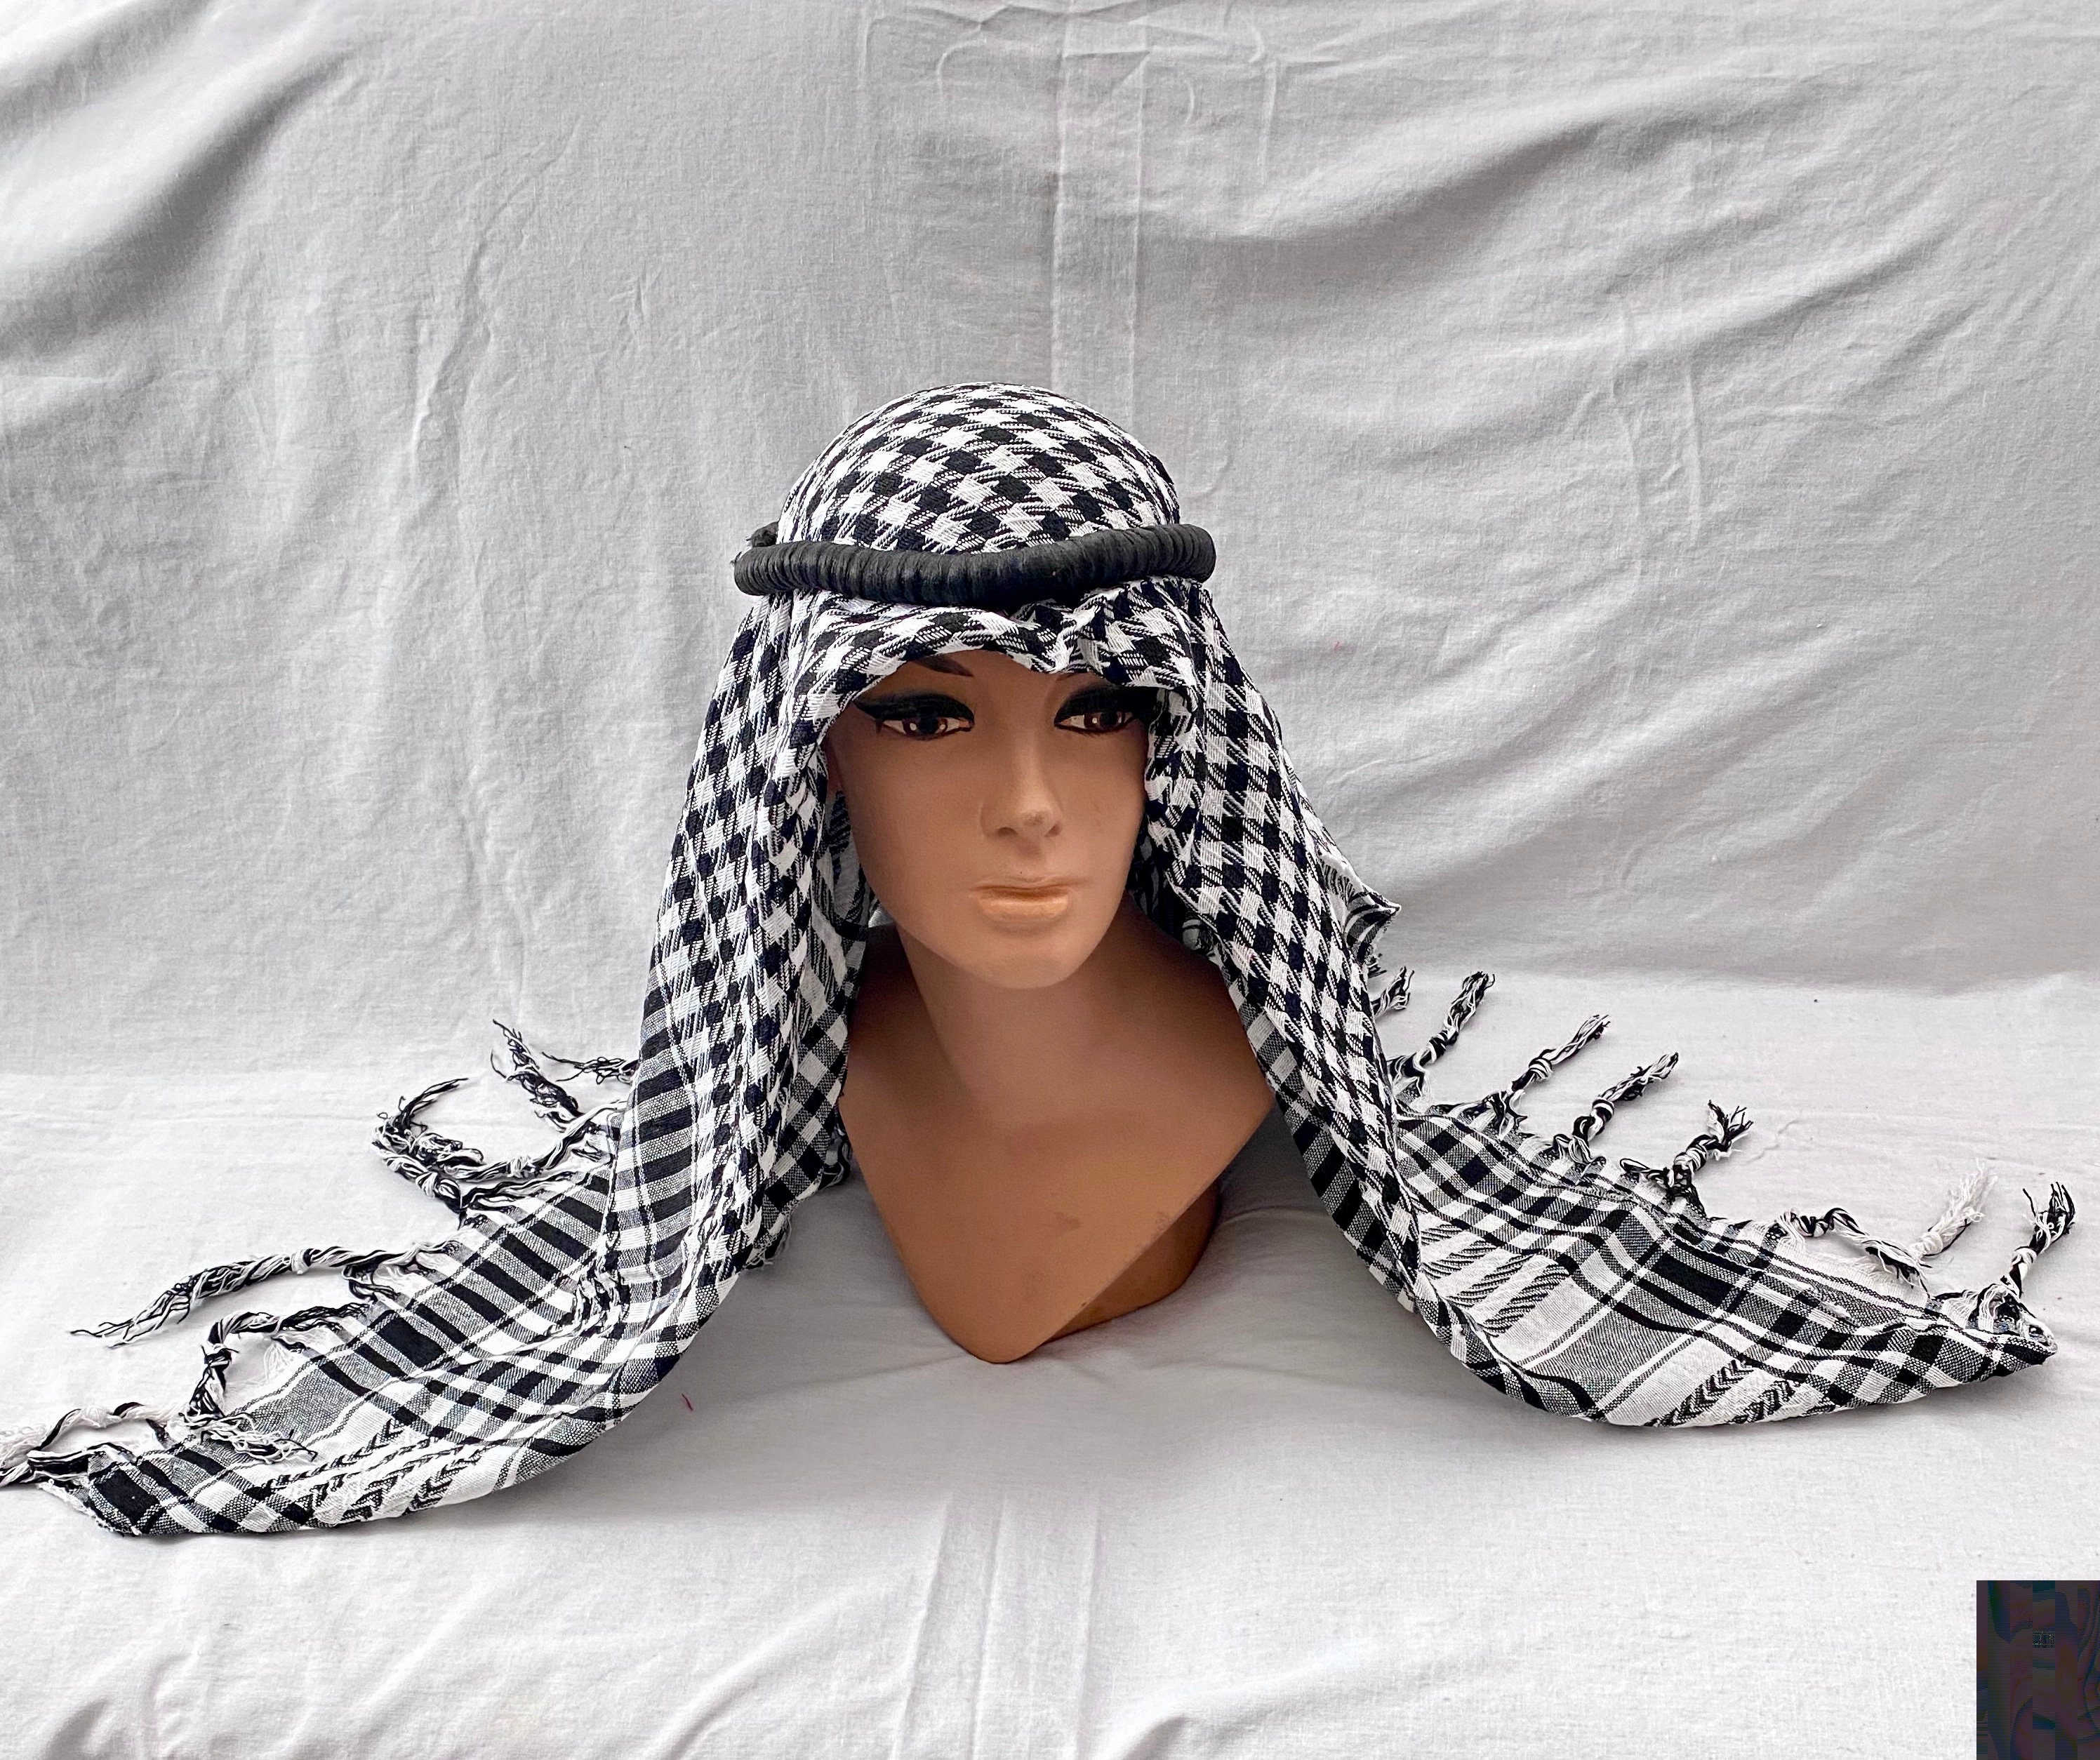 Adult Men Arab Head Scarf Keffiyeh Middle East Desert Red Shemagh Wrap  Muslim Headwear Scarf - China Palestine Scarf and Scarf price